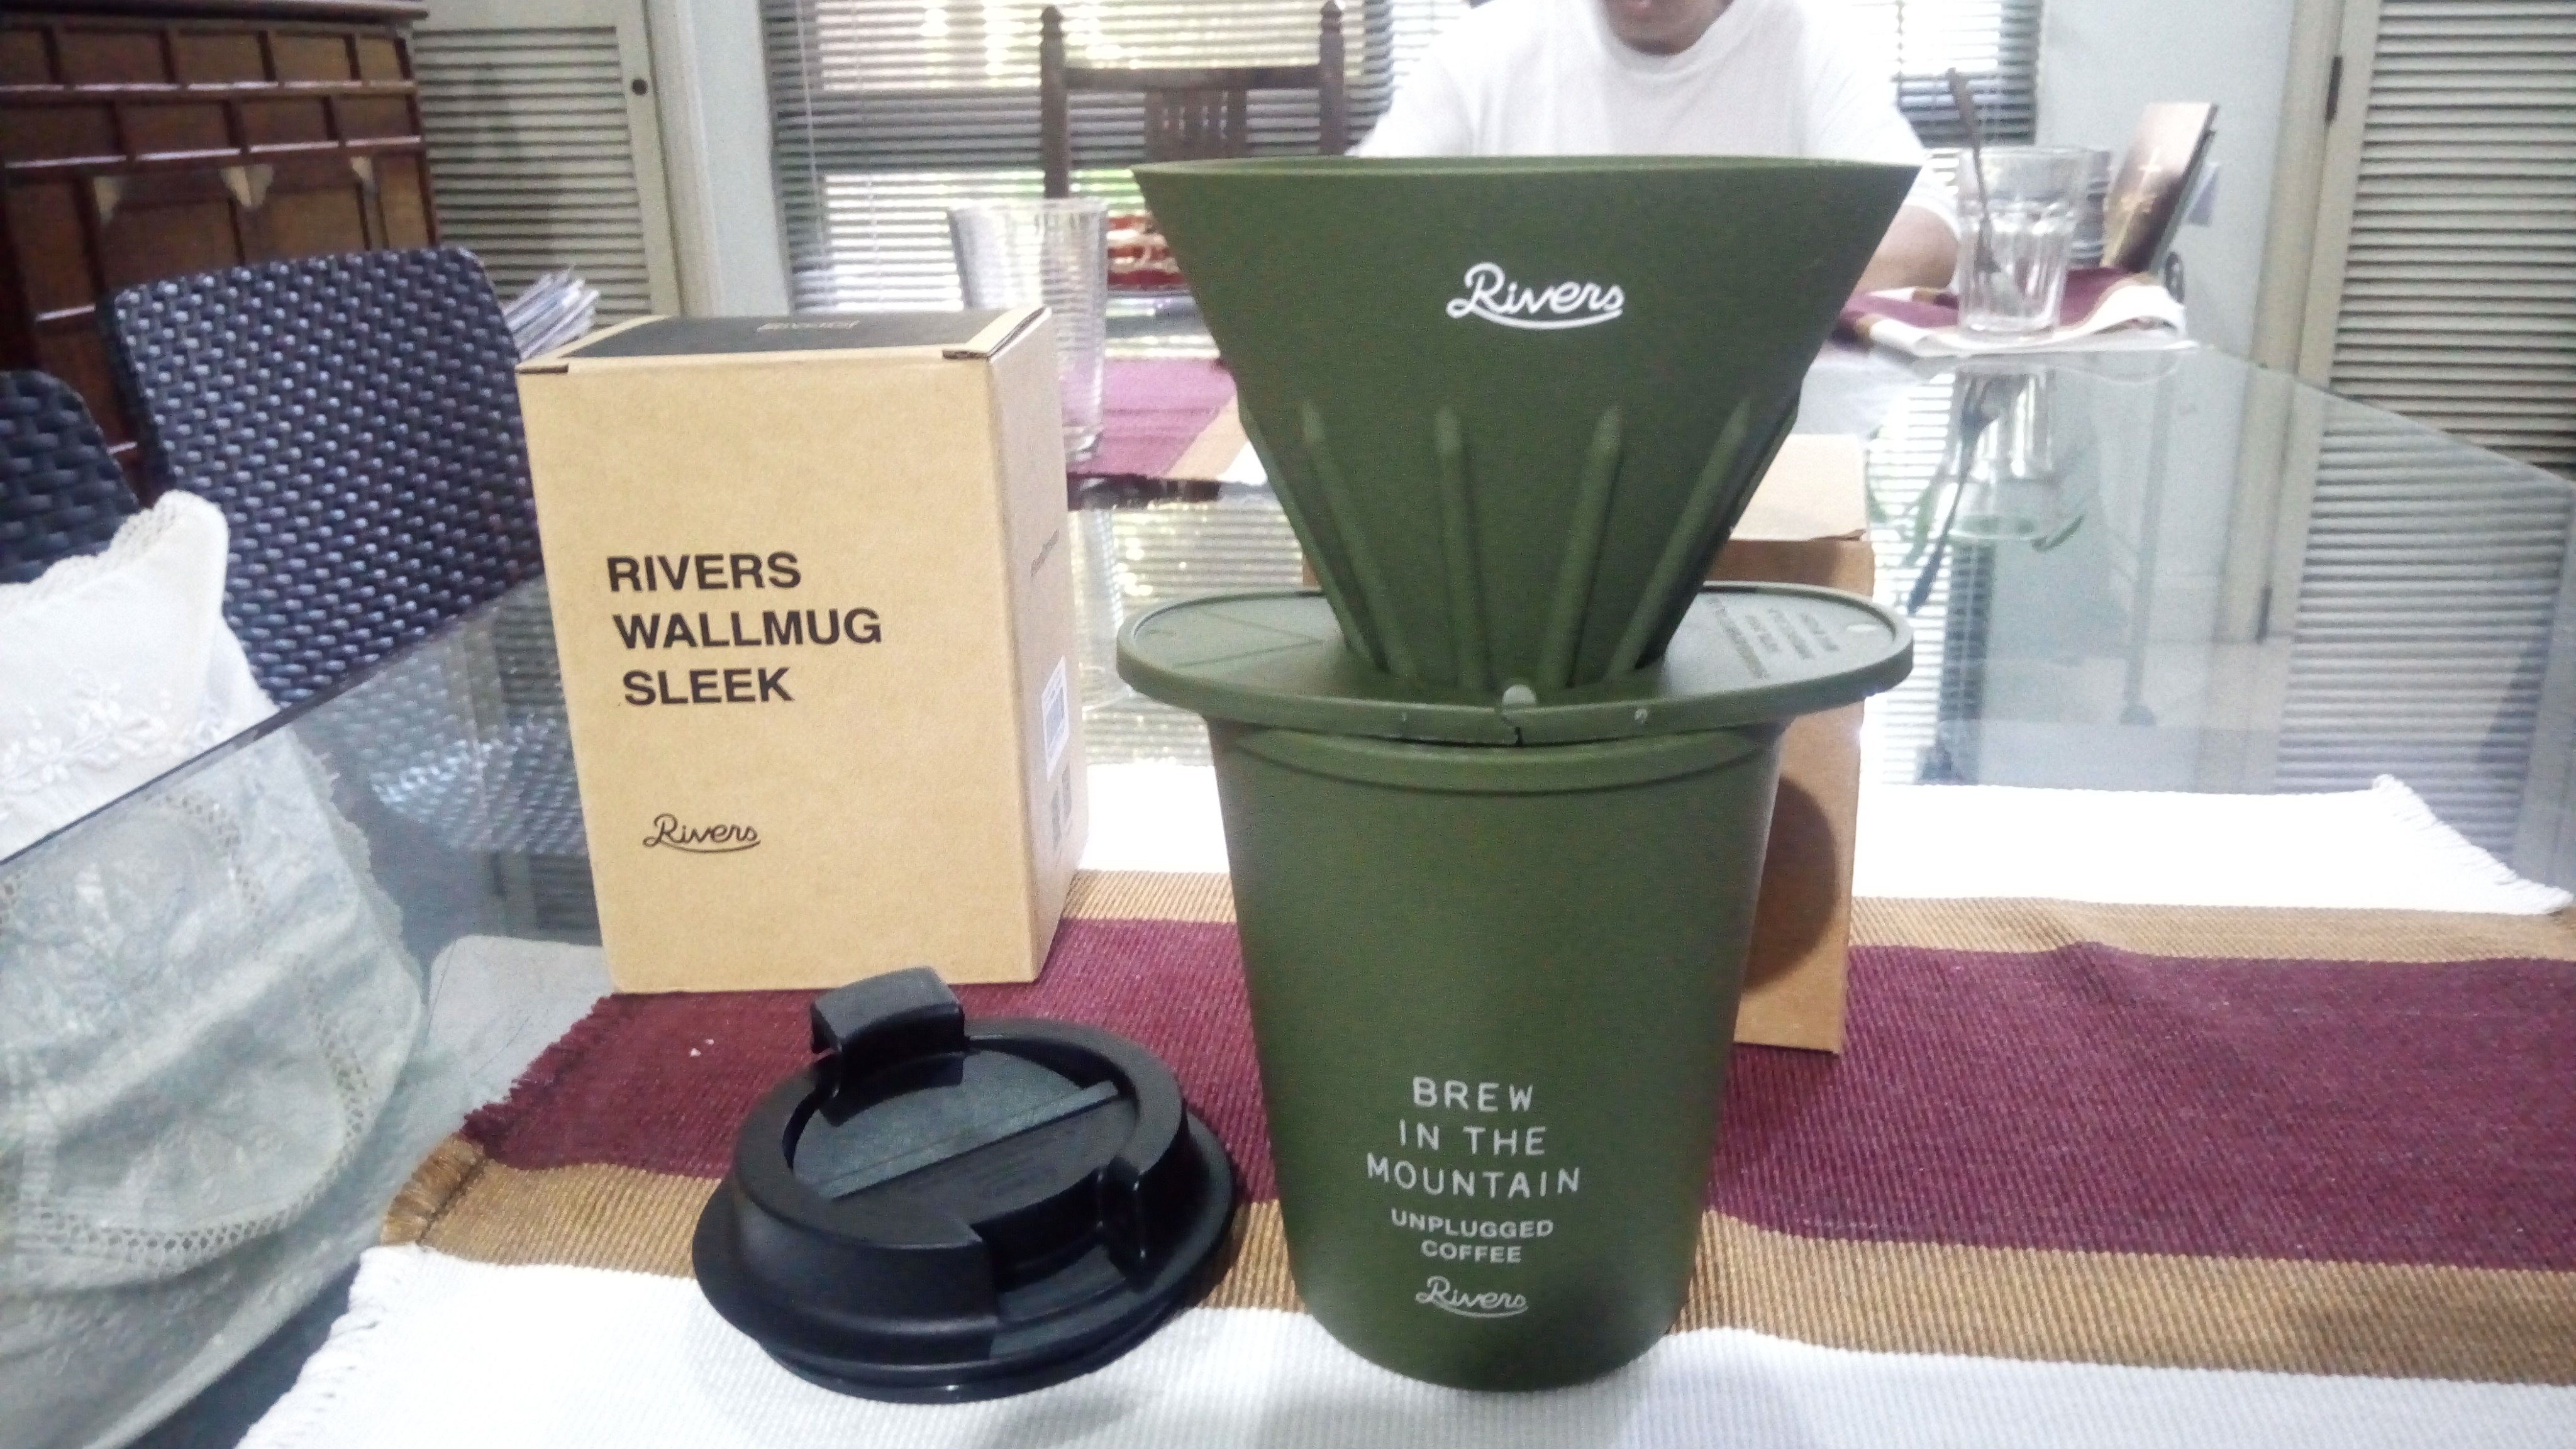 Rivers coffee mug and dripper